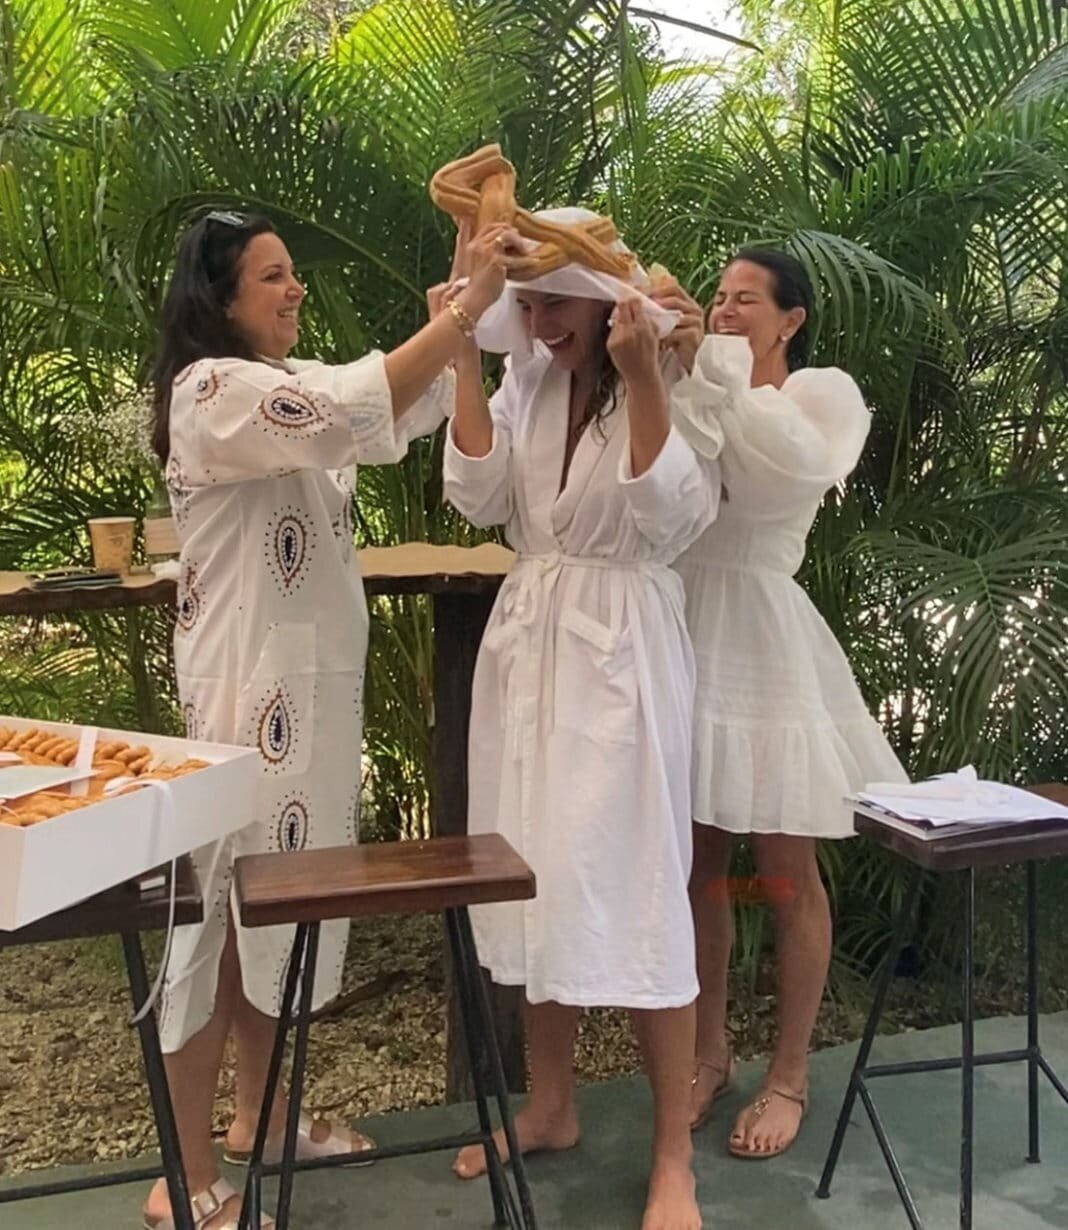 Rachel sheff and Denisse Levy breaking Ka’ak over bride Estrella Levy Sheff’s head.